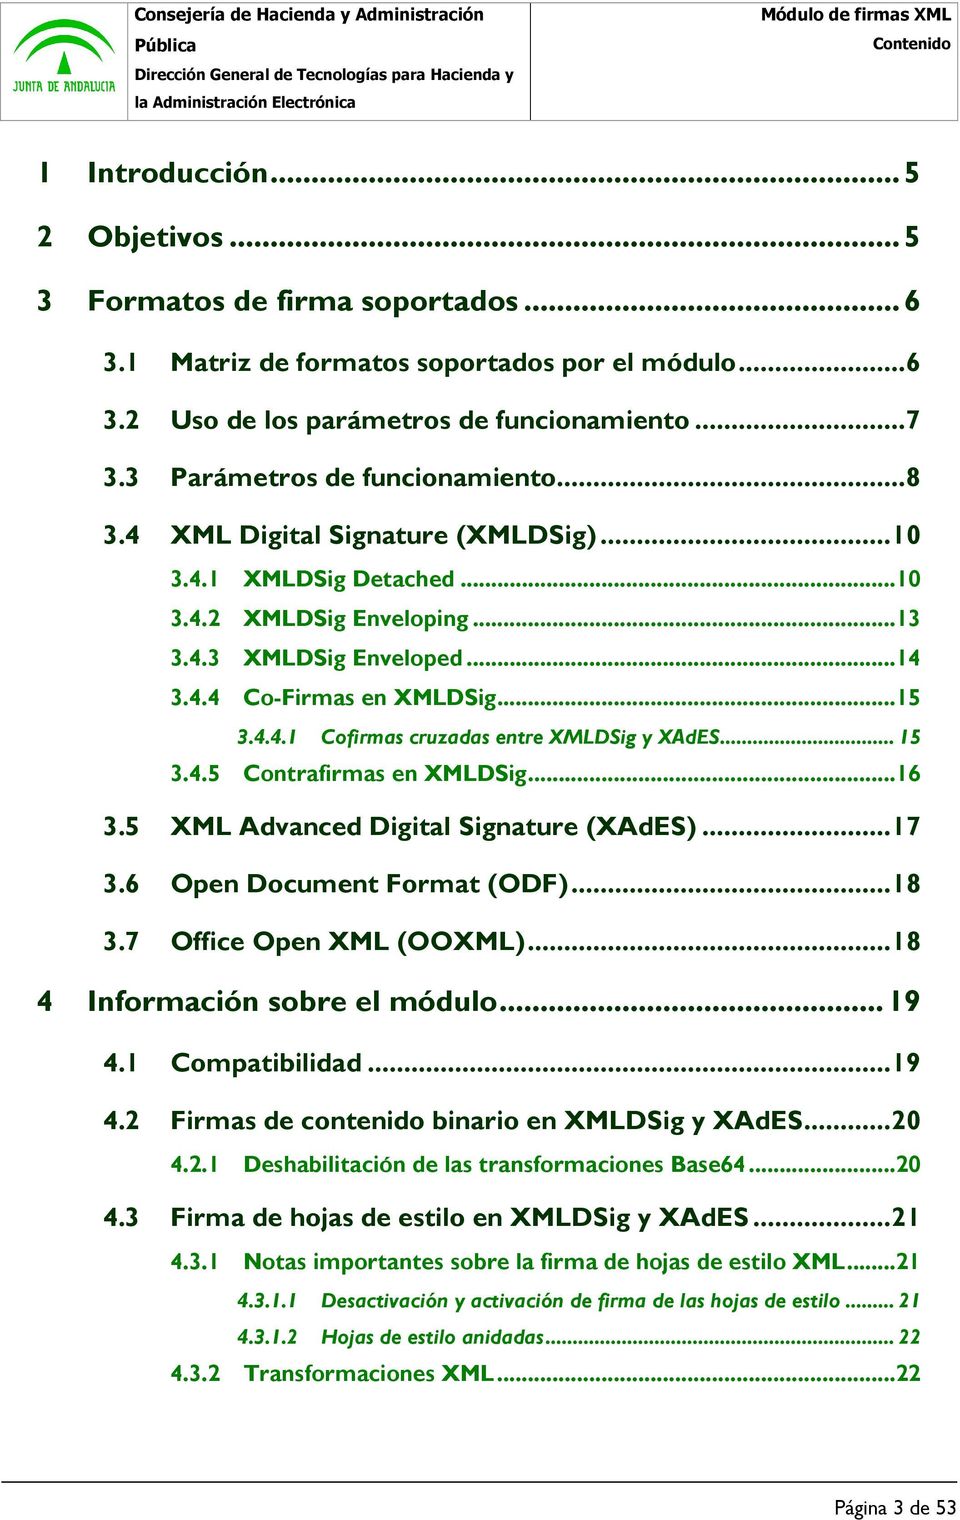 .. 15 3.4.5 Contrafirmas en XMLDSig...16 3.5 XML Advanced Digital Signature (XAdES)...17 3.6 Open Document Format (ODF)...18 3.7 Office Open XML (OOXML)...18 4 Información sobre el módulo...19 4.